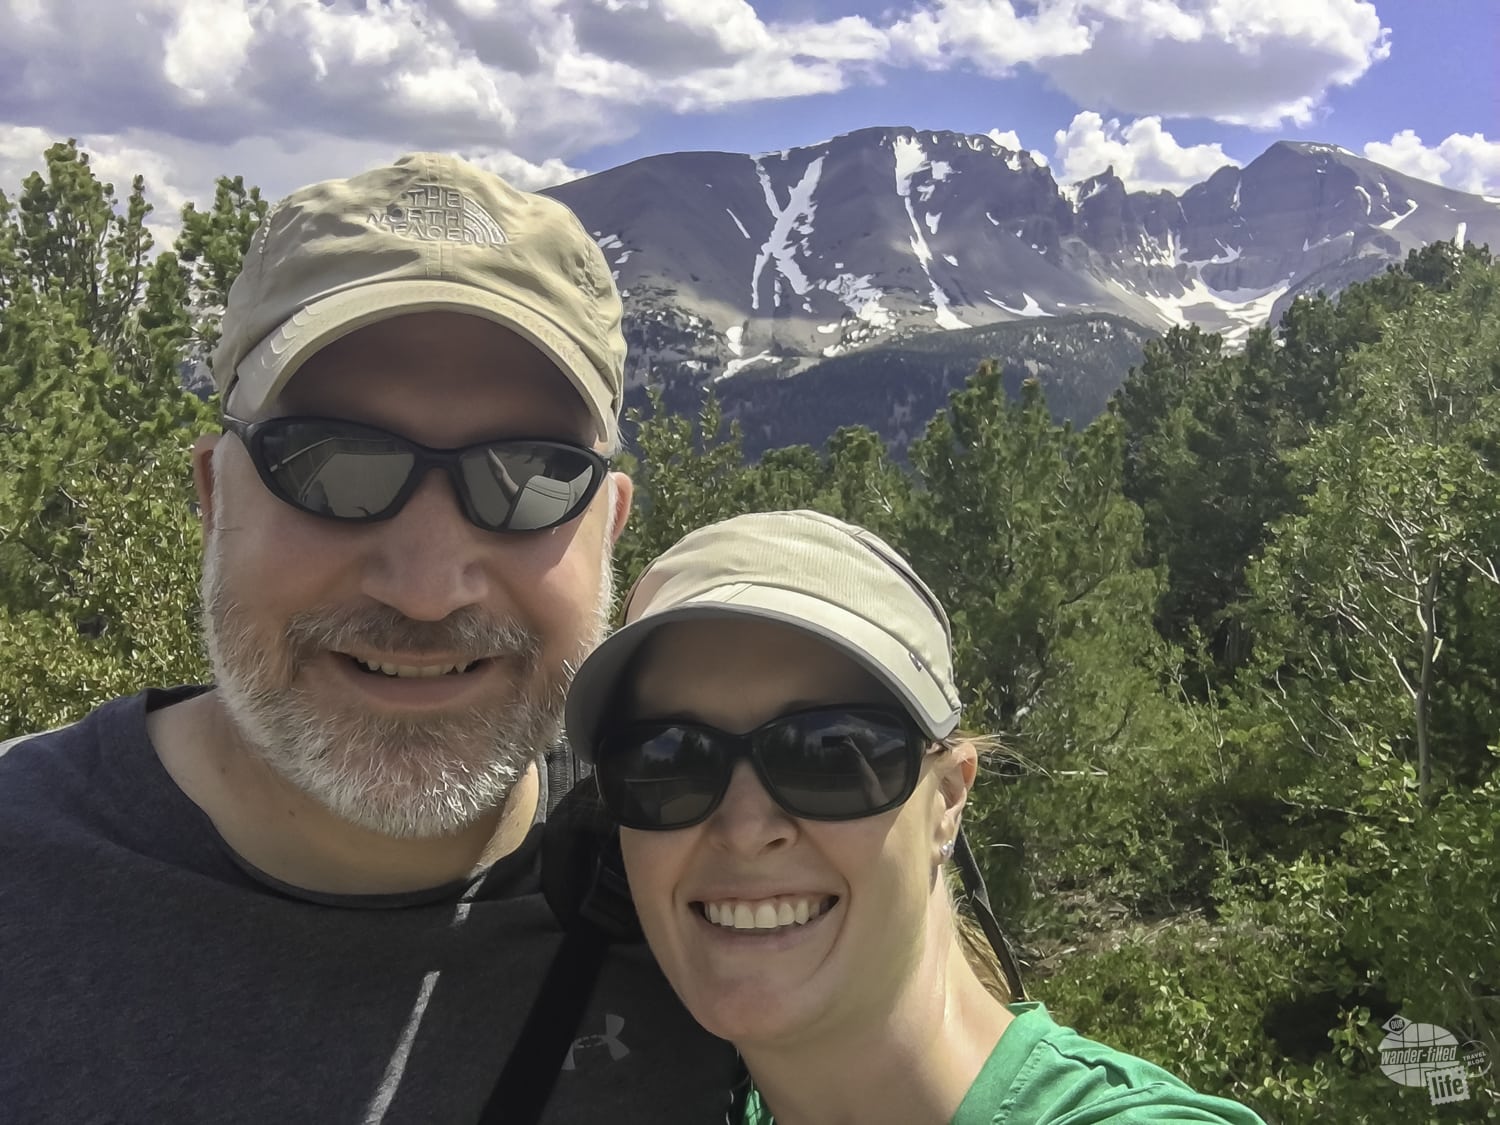 Selfie time at Great Basin National Park.